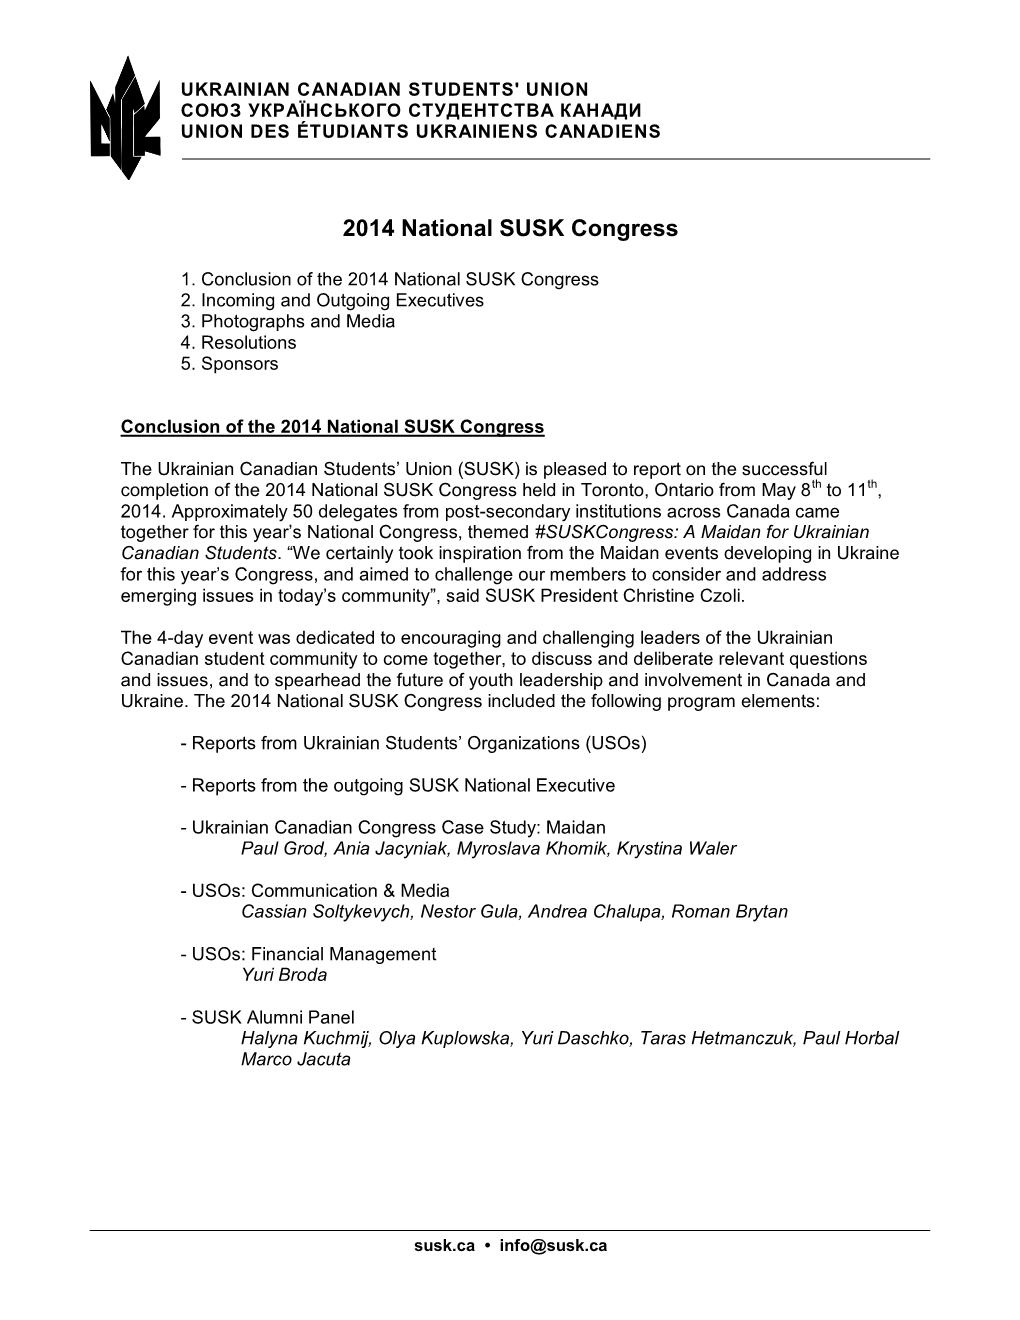 2014 National SUSK Congress Release